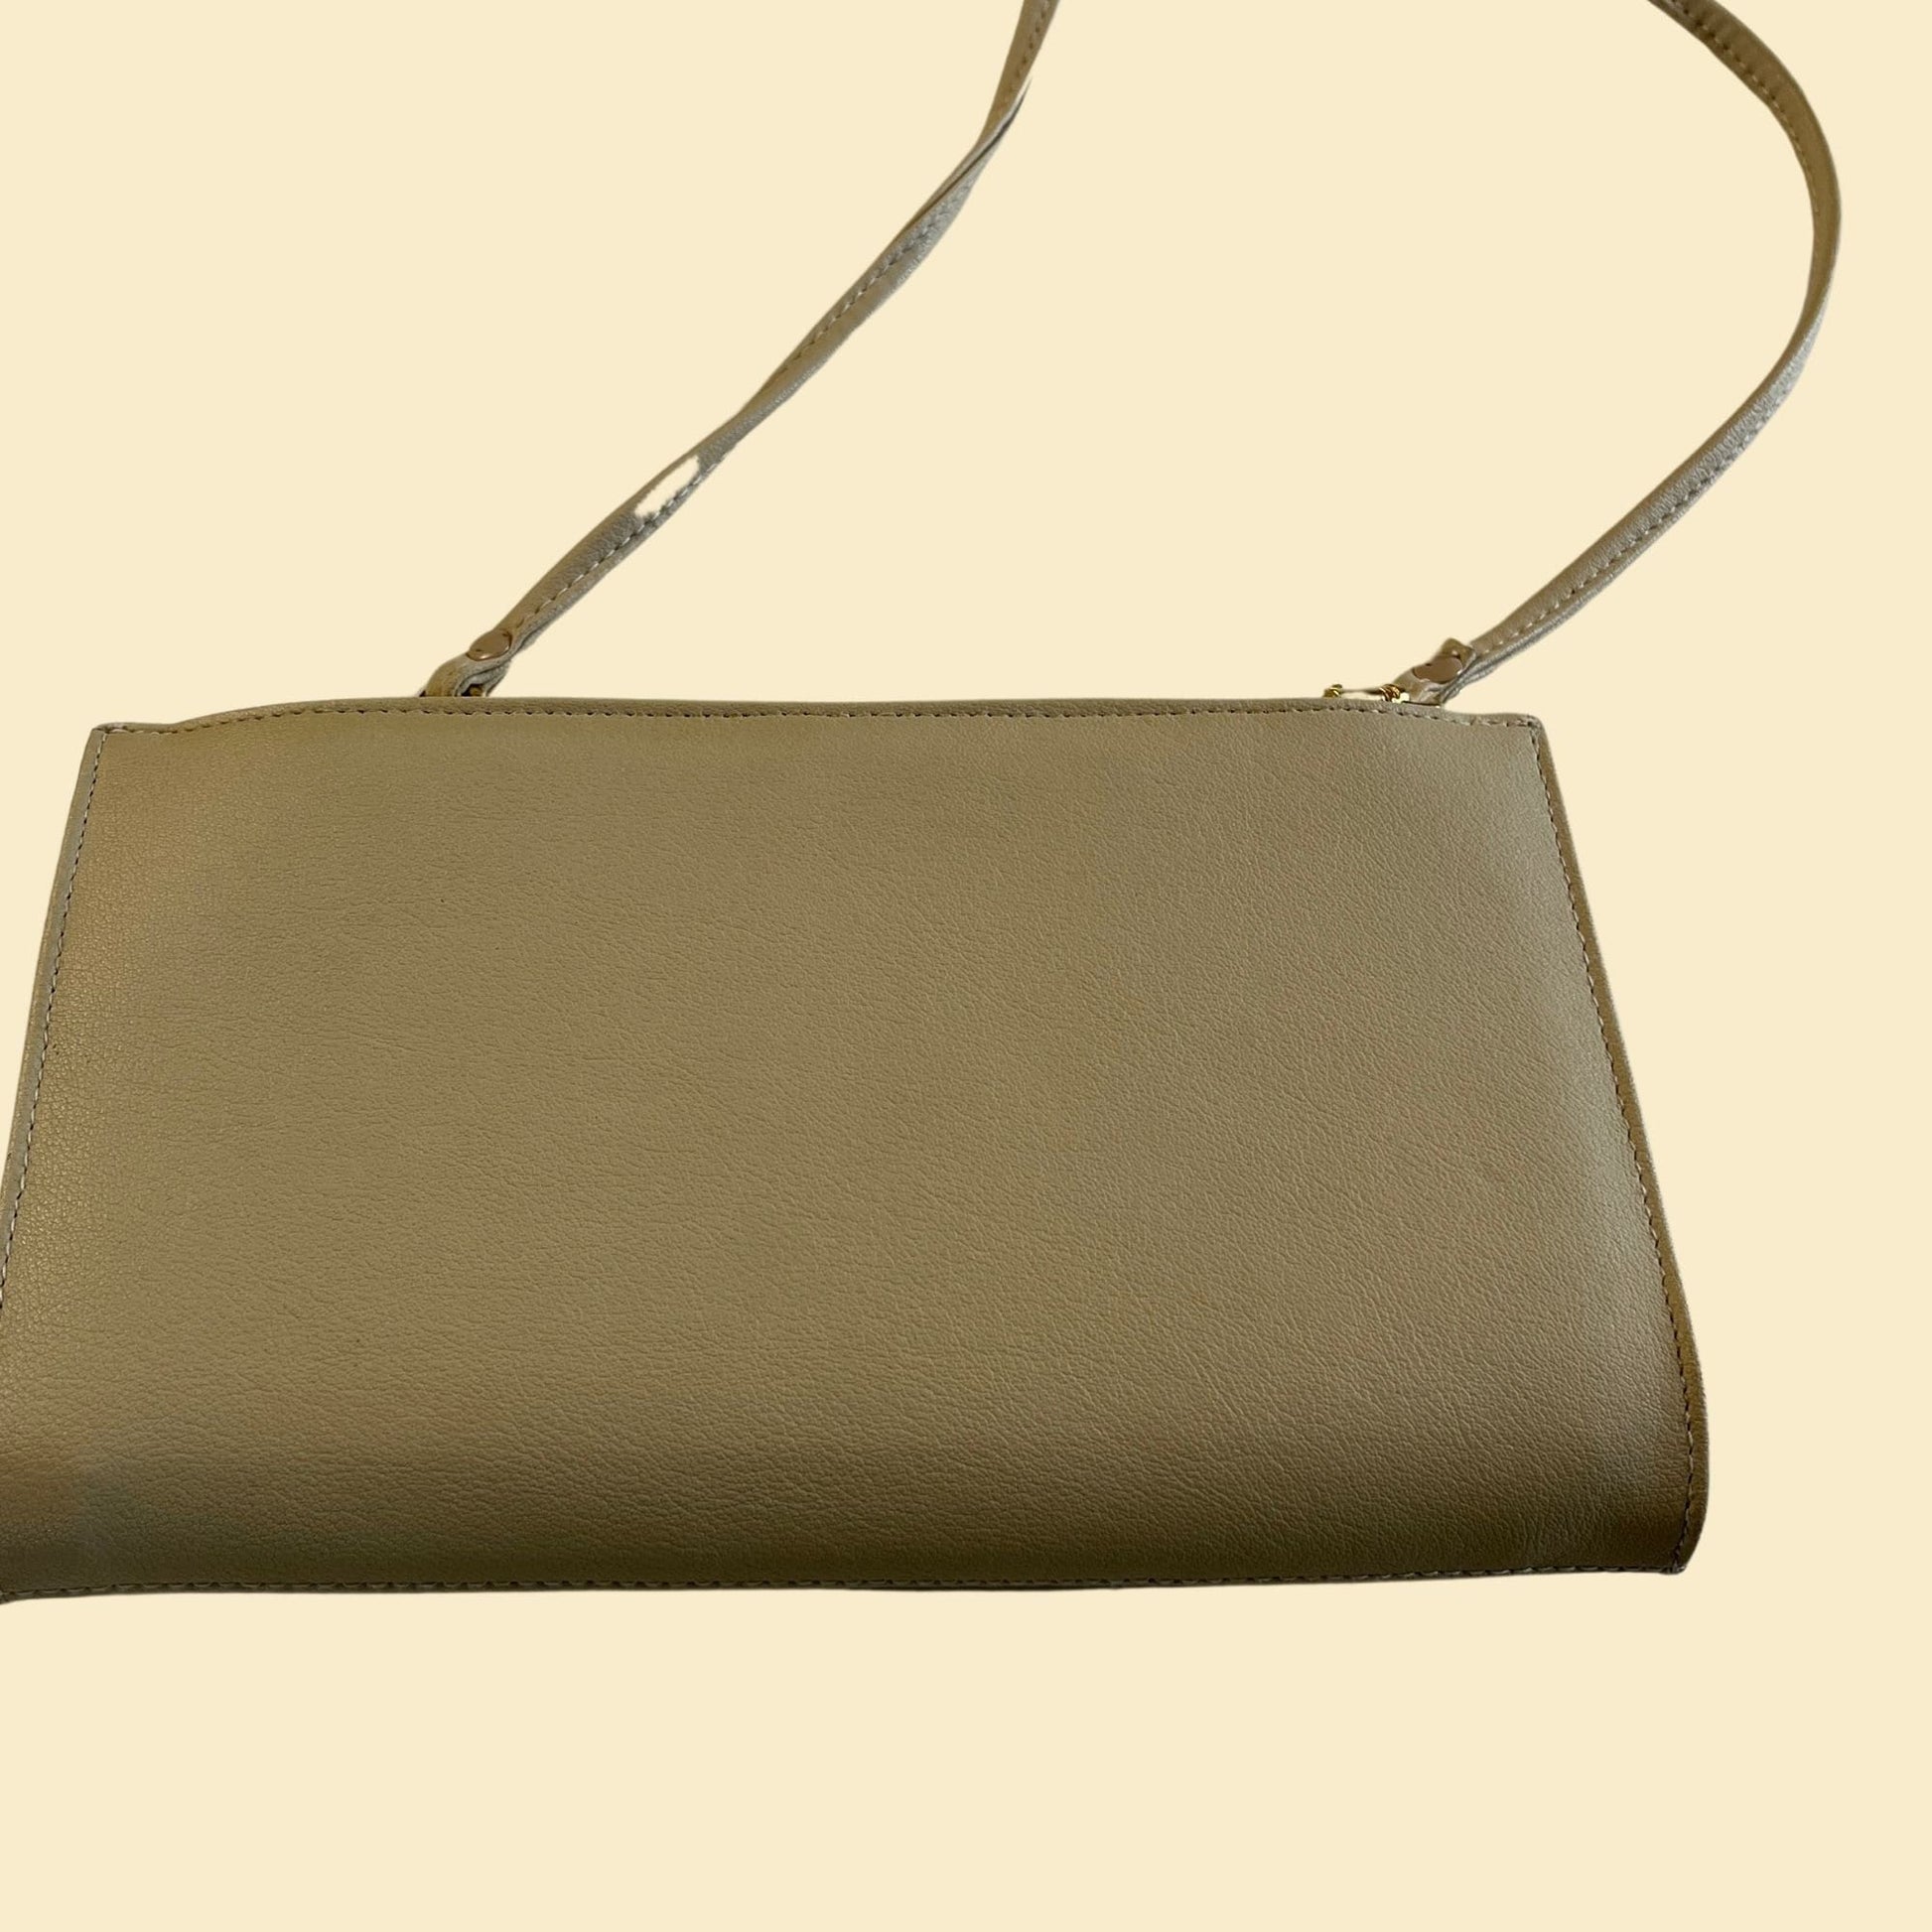 90s cream faux leather purse, vintage 1990s rectangular beige shoulder bag with gold colored hardware/emblem